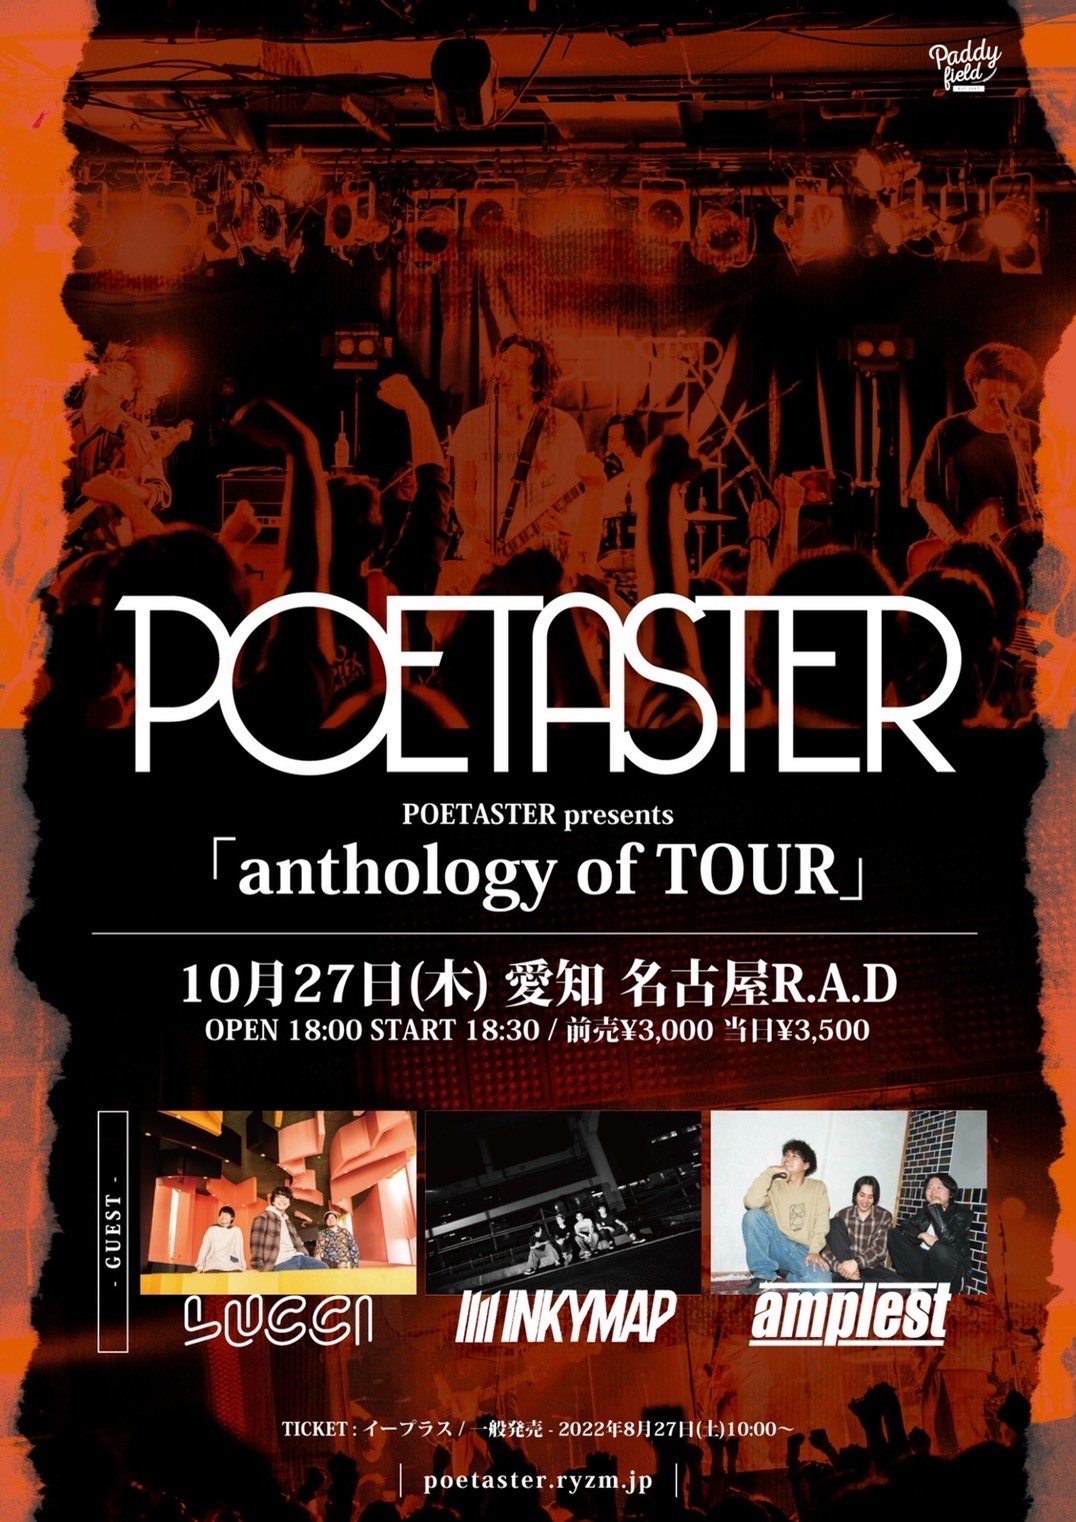 POETASTER "anthology of TOUR"